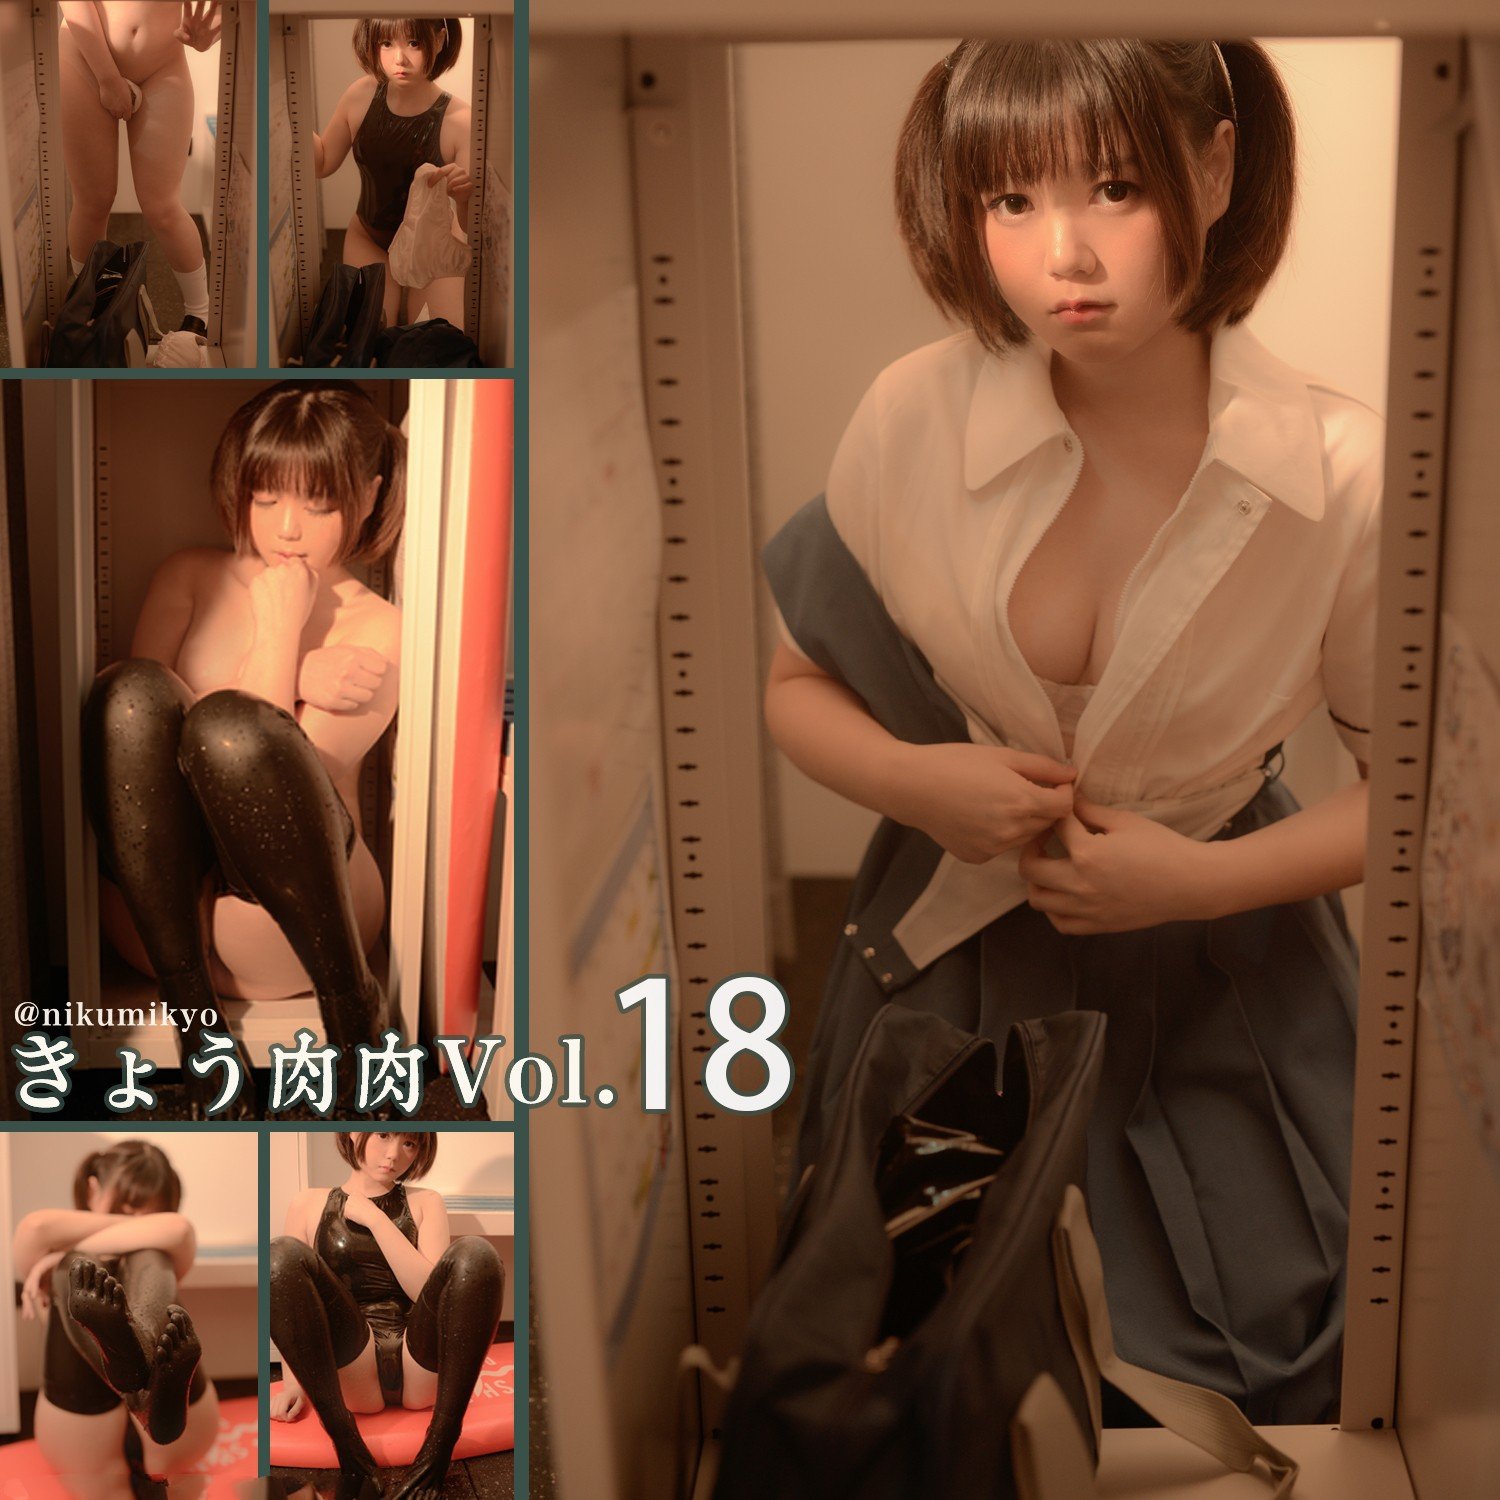 Nikumikyoきょう肉肉-Vol.18 Latex Catsuit Girl ラテックス